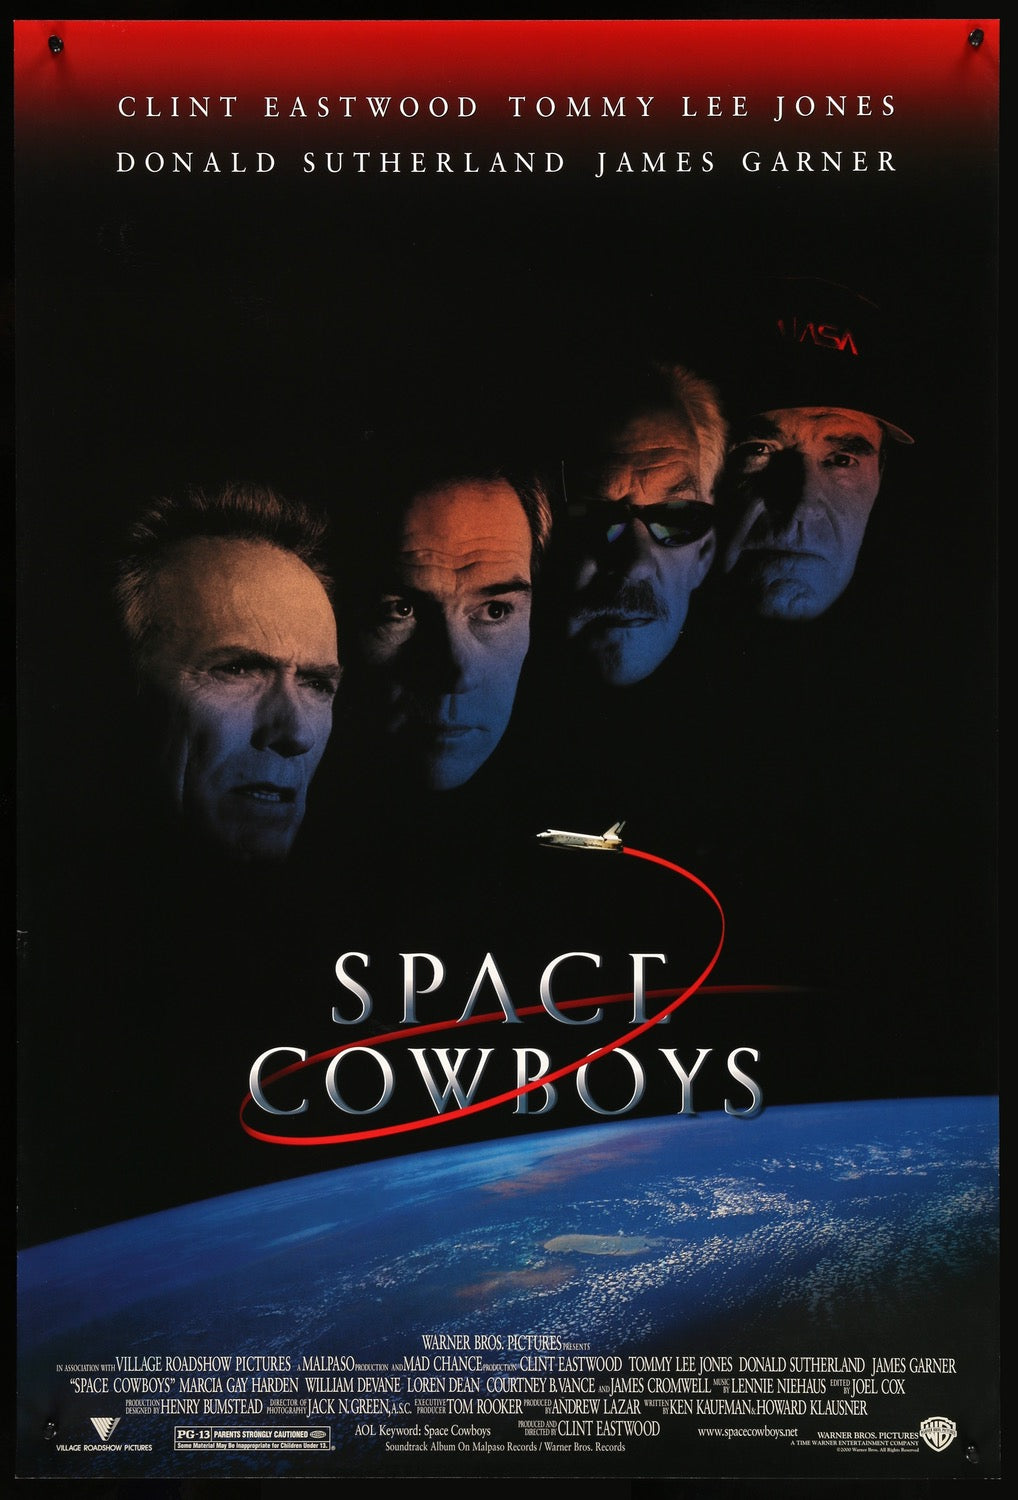 Space Cowboys (2000) original movie poster for sale at Original Film Art